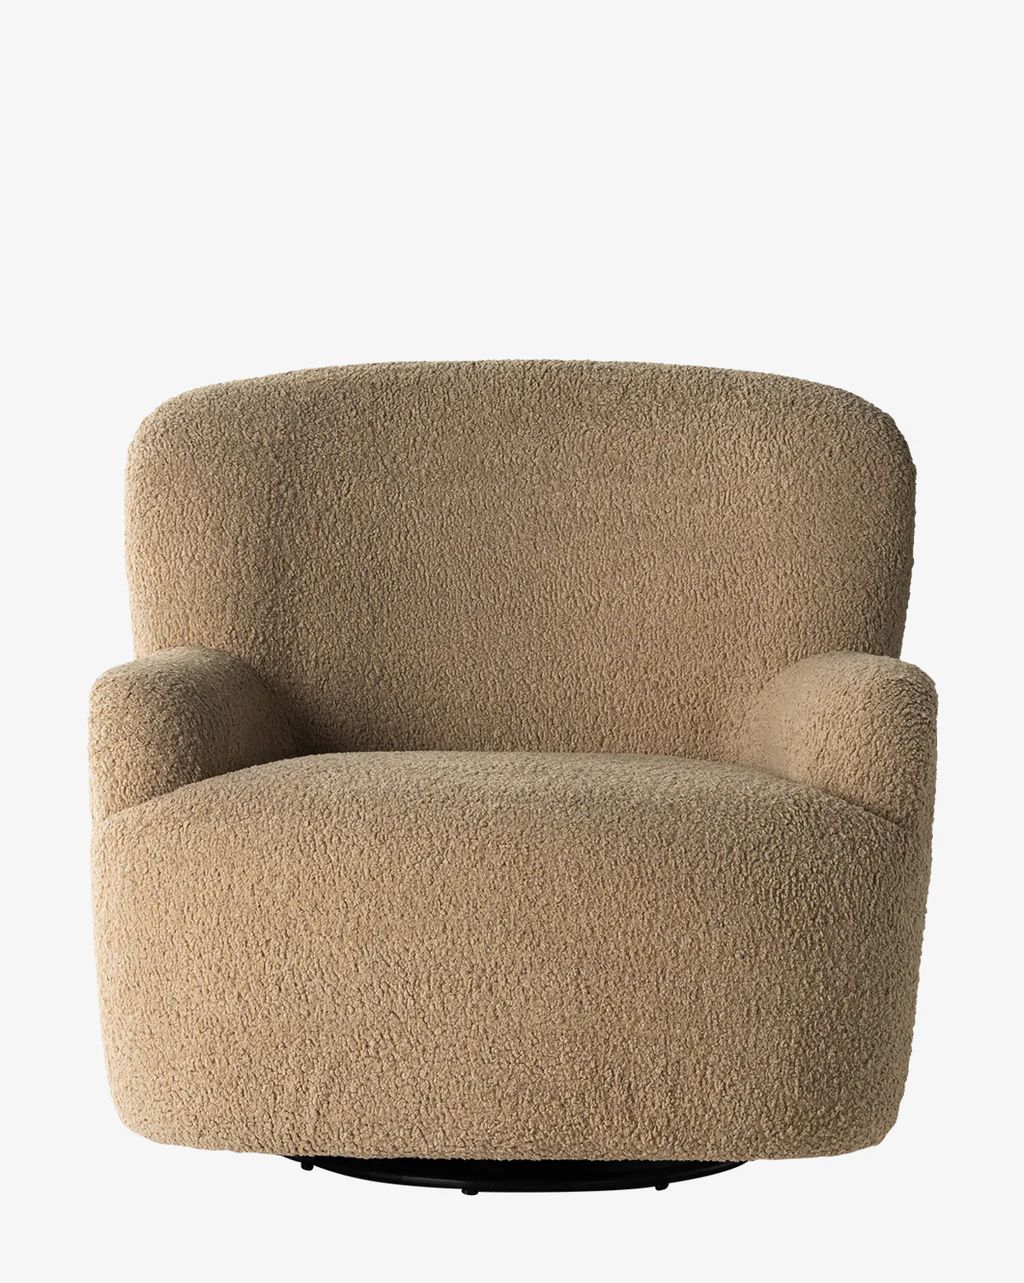 Adelia Swivel Chair | McGee & Co.